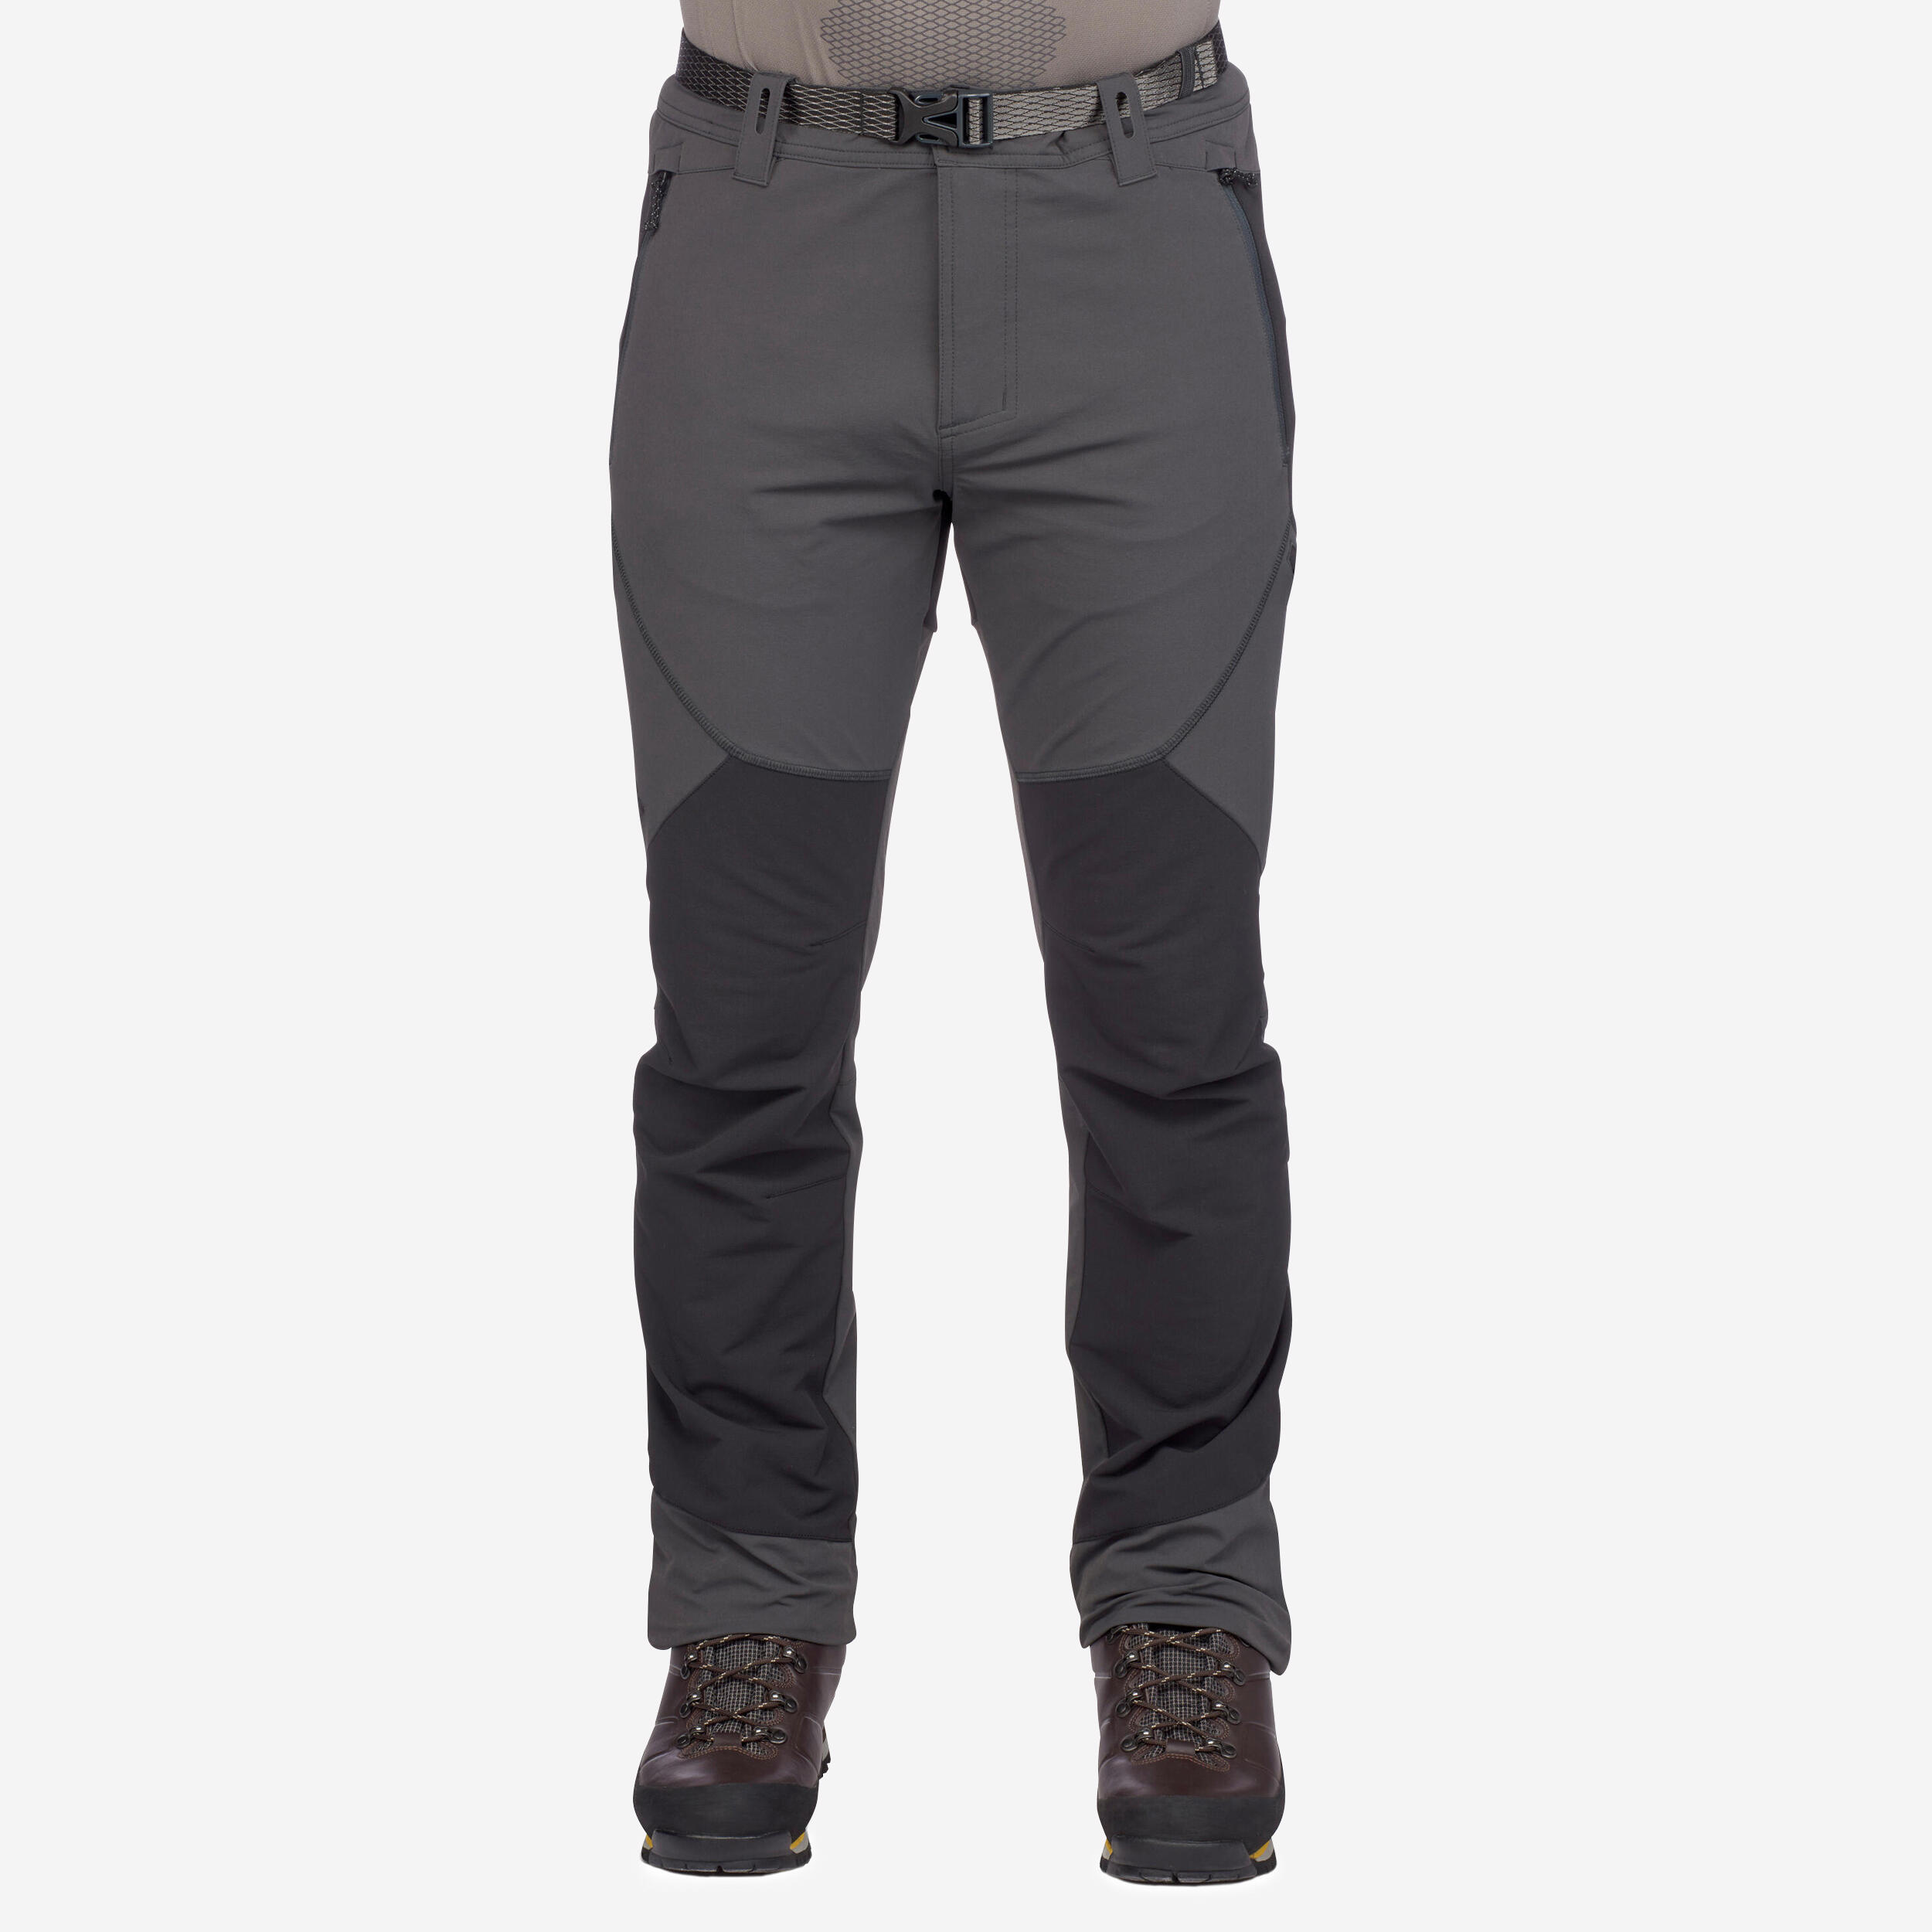 Men's-Convertible-Hiking-Pants Quick Dry Lightweight Zip Off Breathable  Cargo Pants for Outdoor, Fishing, Safari - Walmart.com